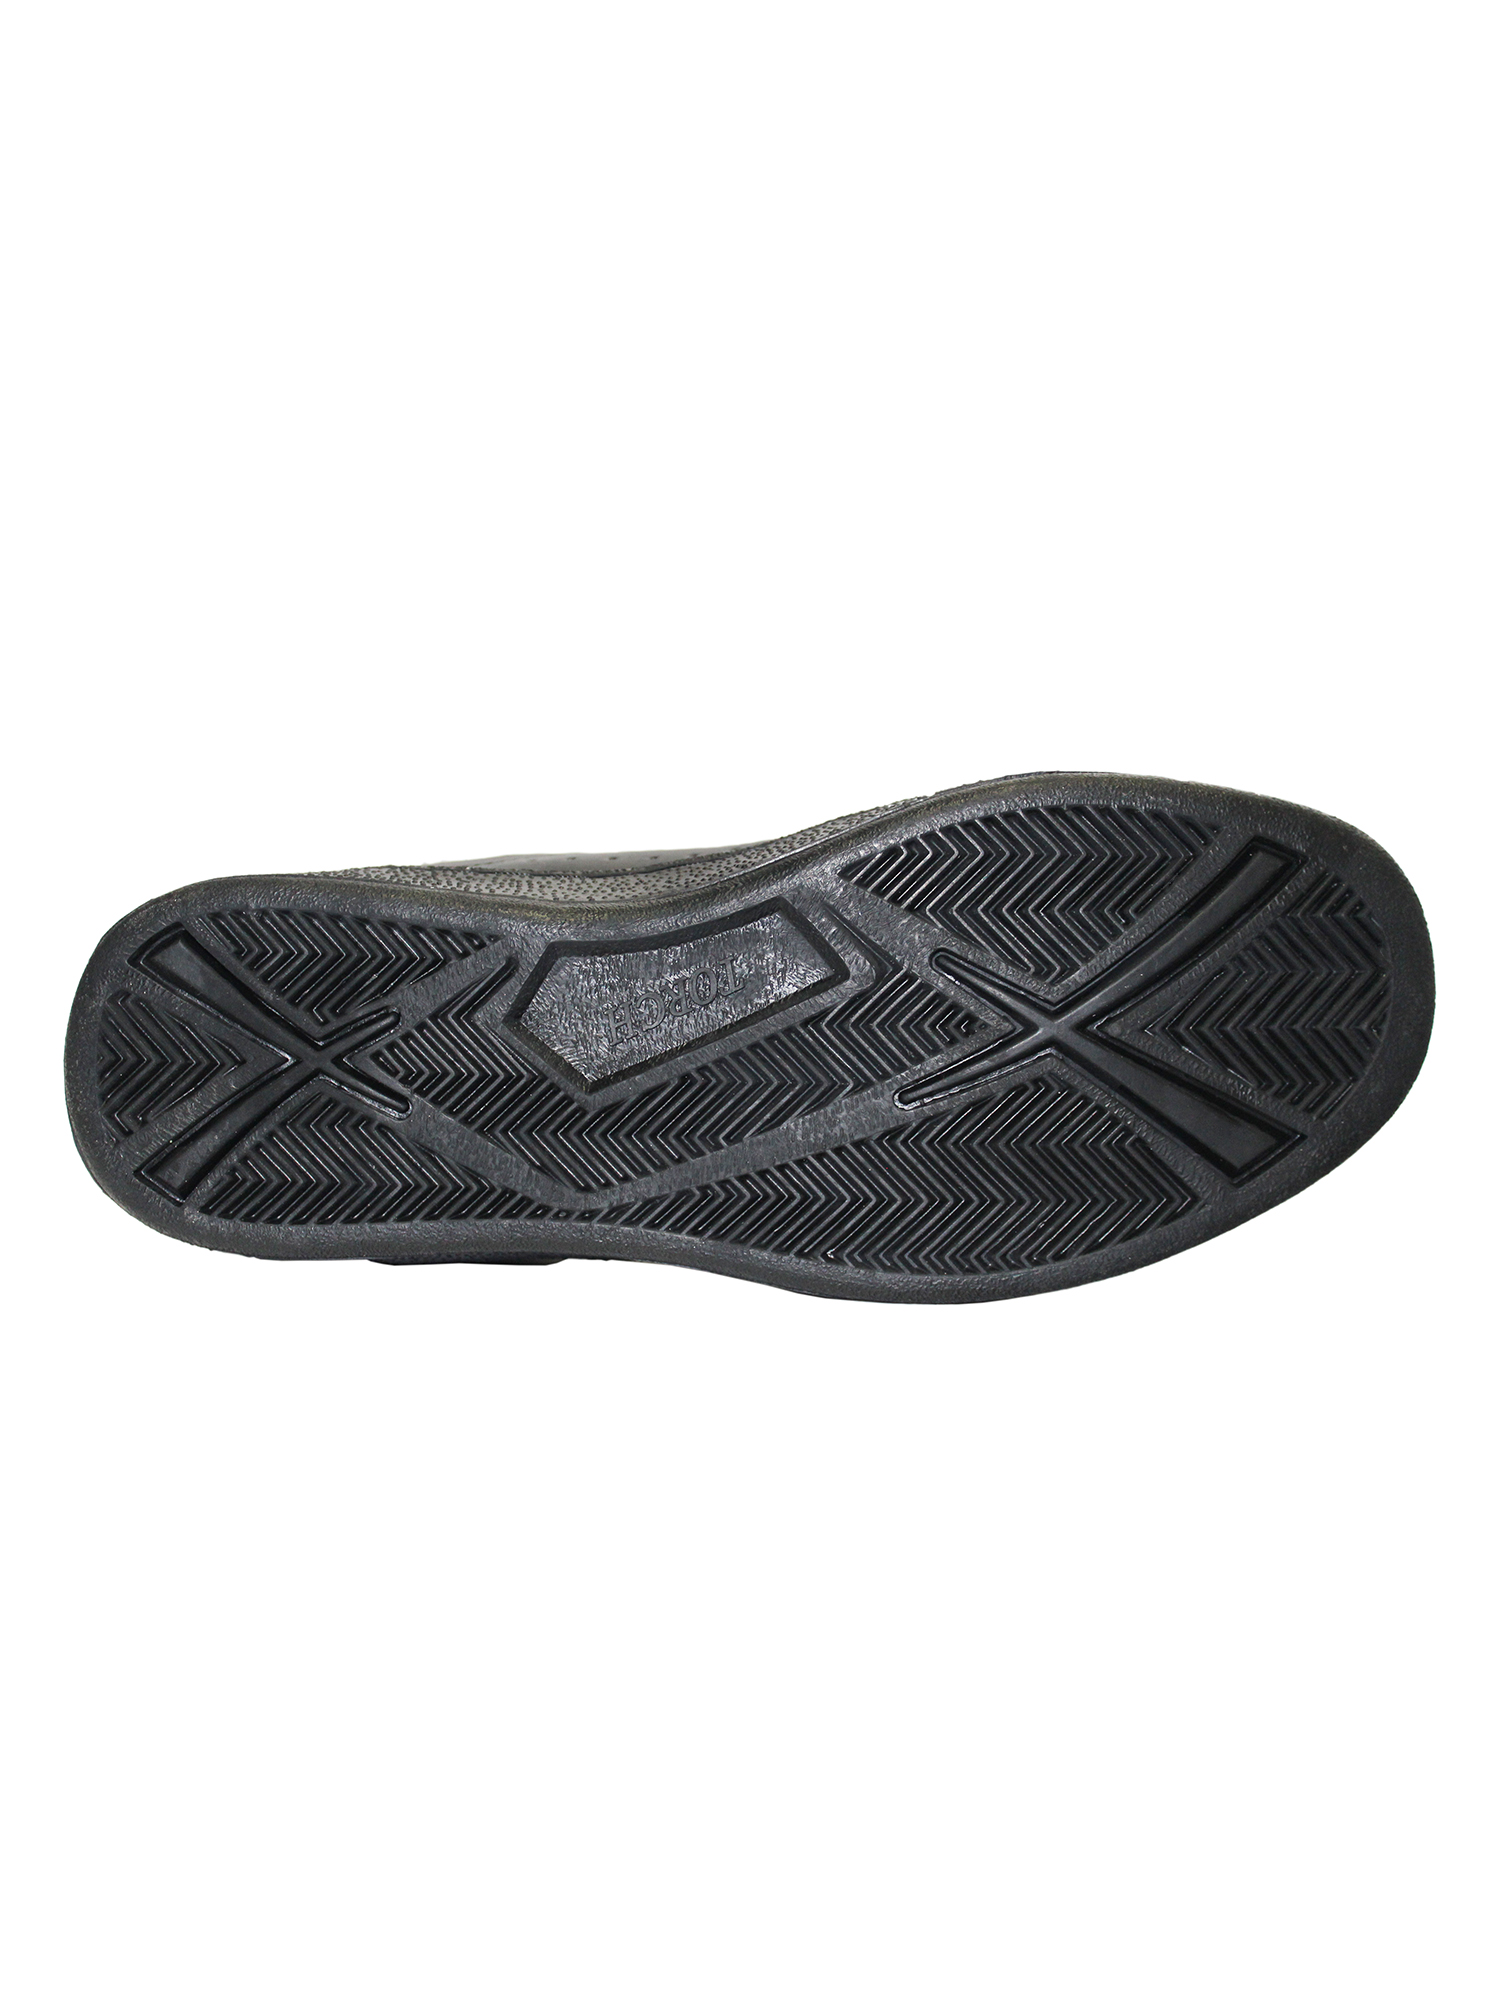 Tanleewa Men's Leather Strap Sneakers Lightweight Hook and Loop Walking Shoe Size 14 Adult Male - image 3 of 4